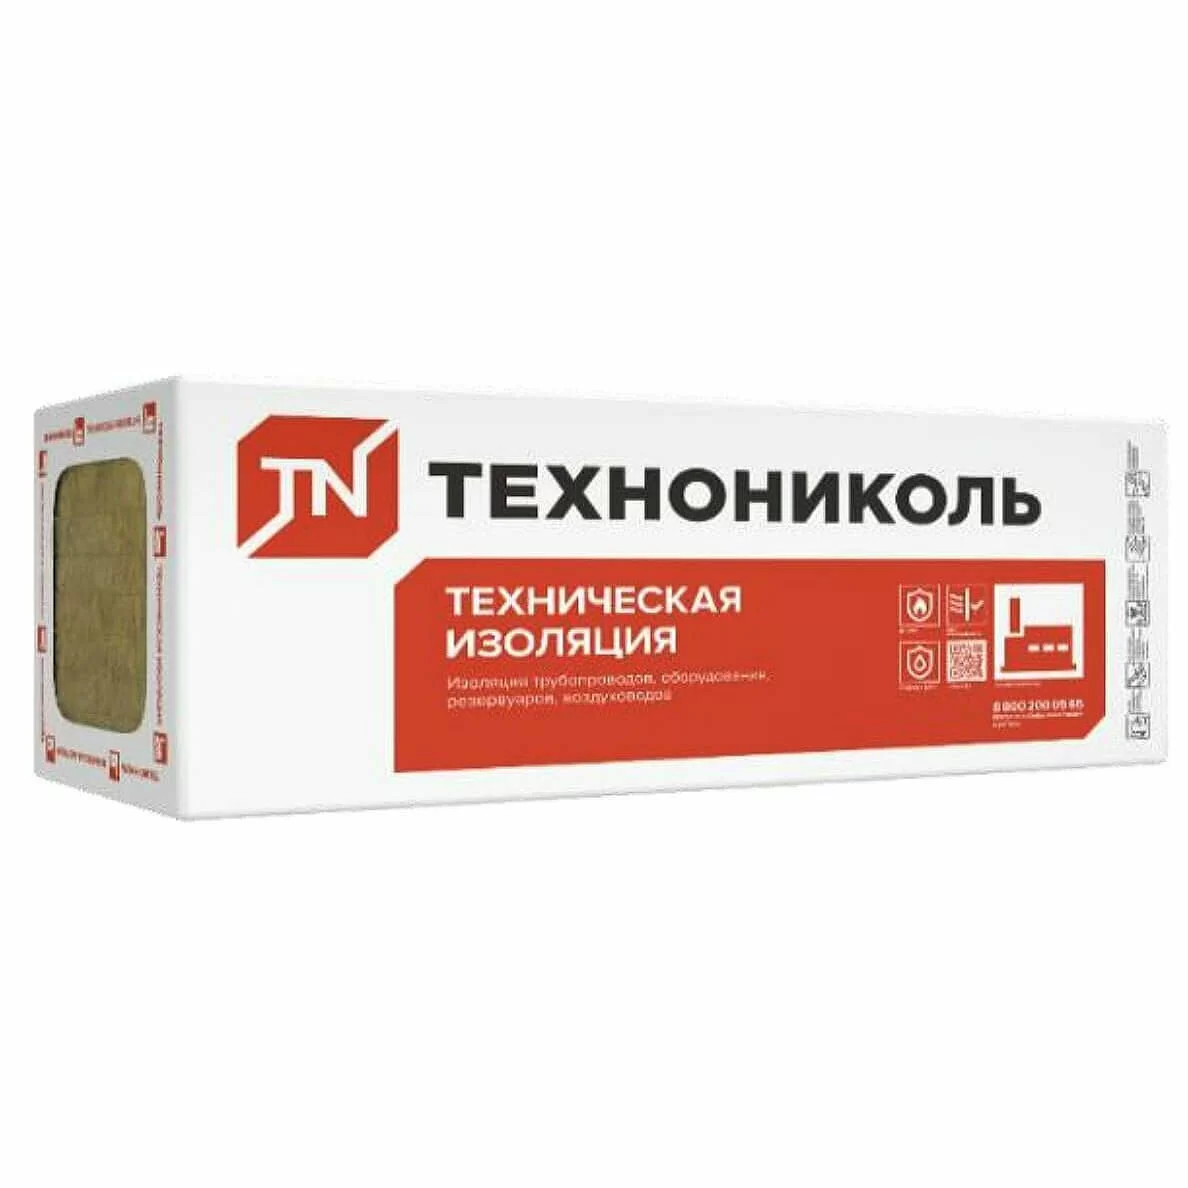 Плита ТЕХНО Т 150 ФА 1200х600х100 96 шт от магазина ЛесКонПром.ру